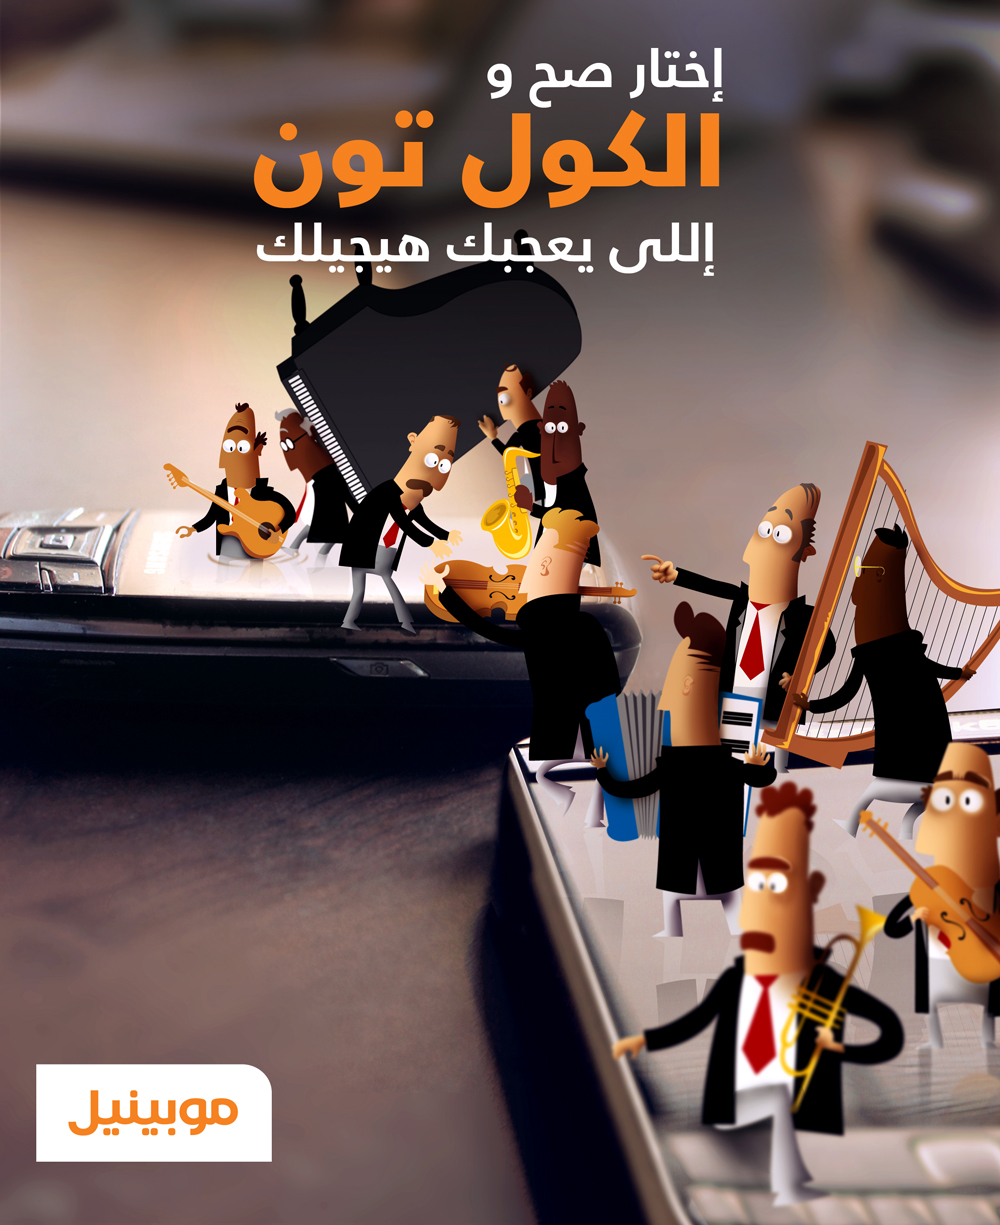 Mobinil call tone concert band instruments Musical cartoon Music Download mobiles egypt Leo Burnett hamba illustrations chracaters 